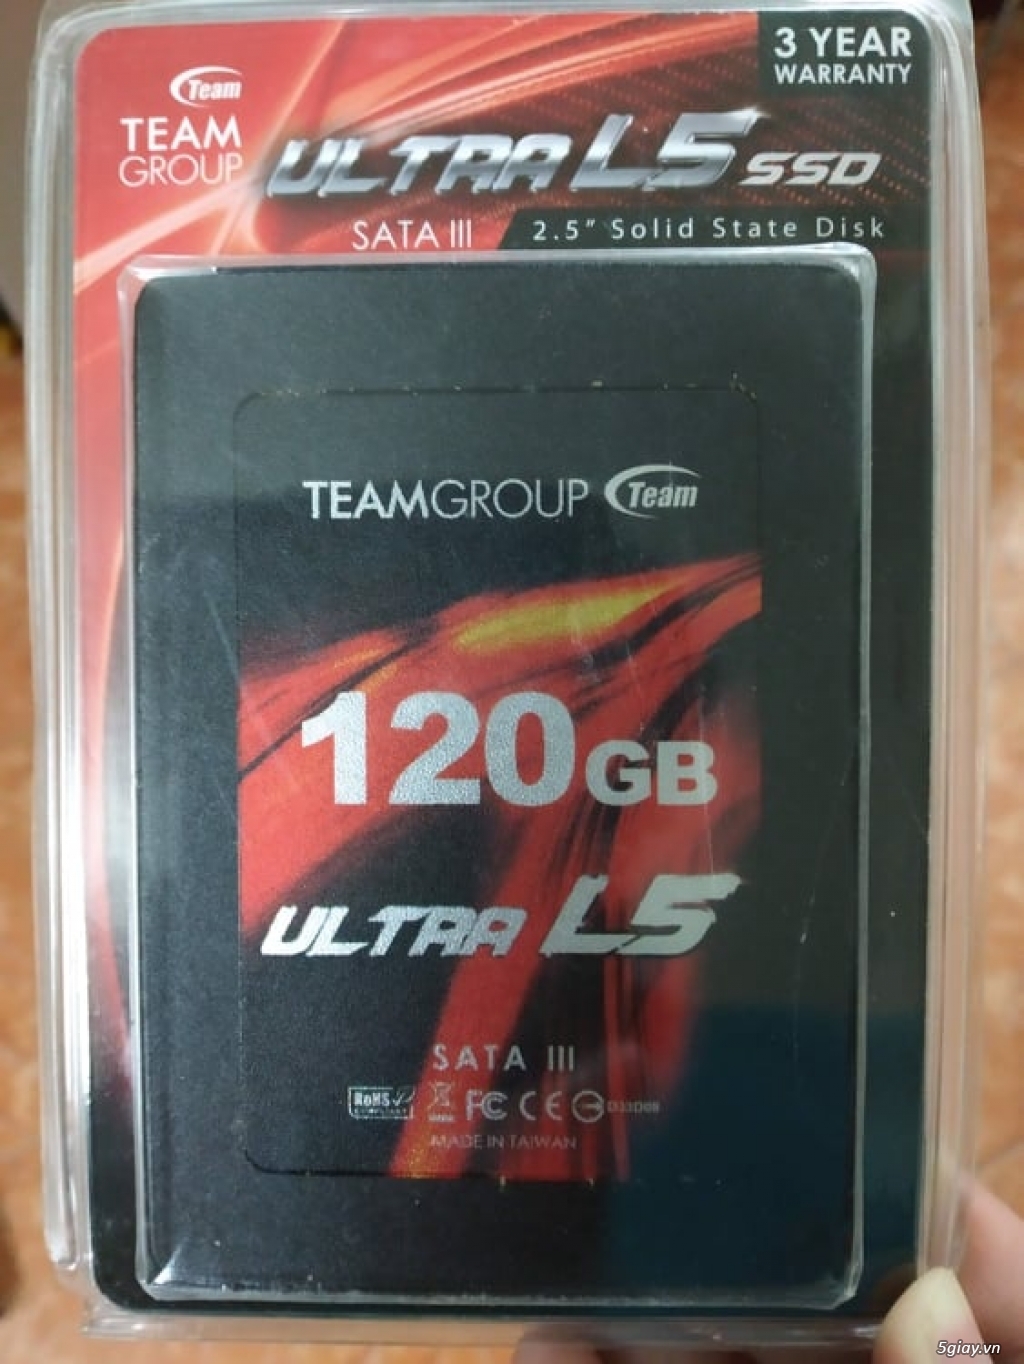 Ổ SSD Team Group 120Gb BH 1 năm - ET 23g 19/7/2019